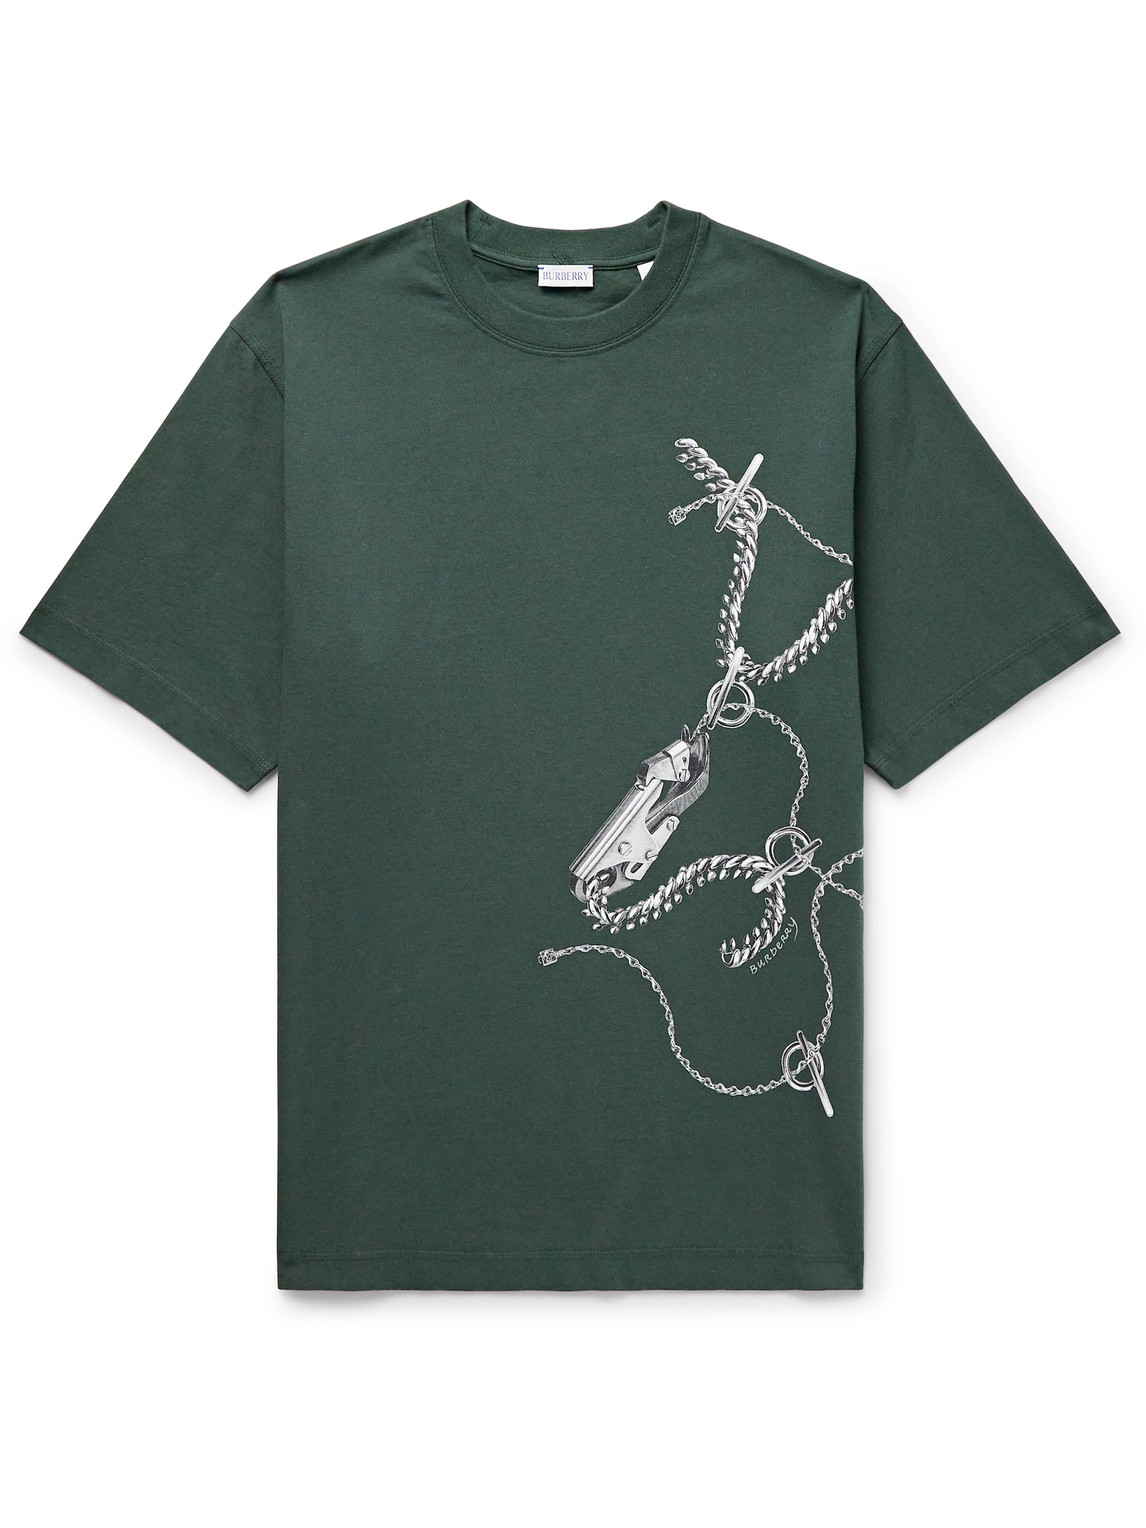 Burberry - Printed Cotton-Jersey T-Shirt - Men - Green - XXL von Burberry